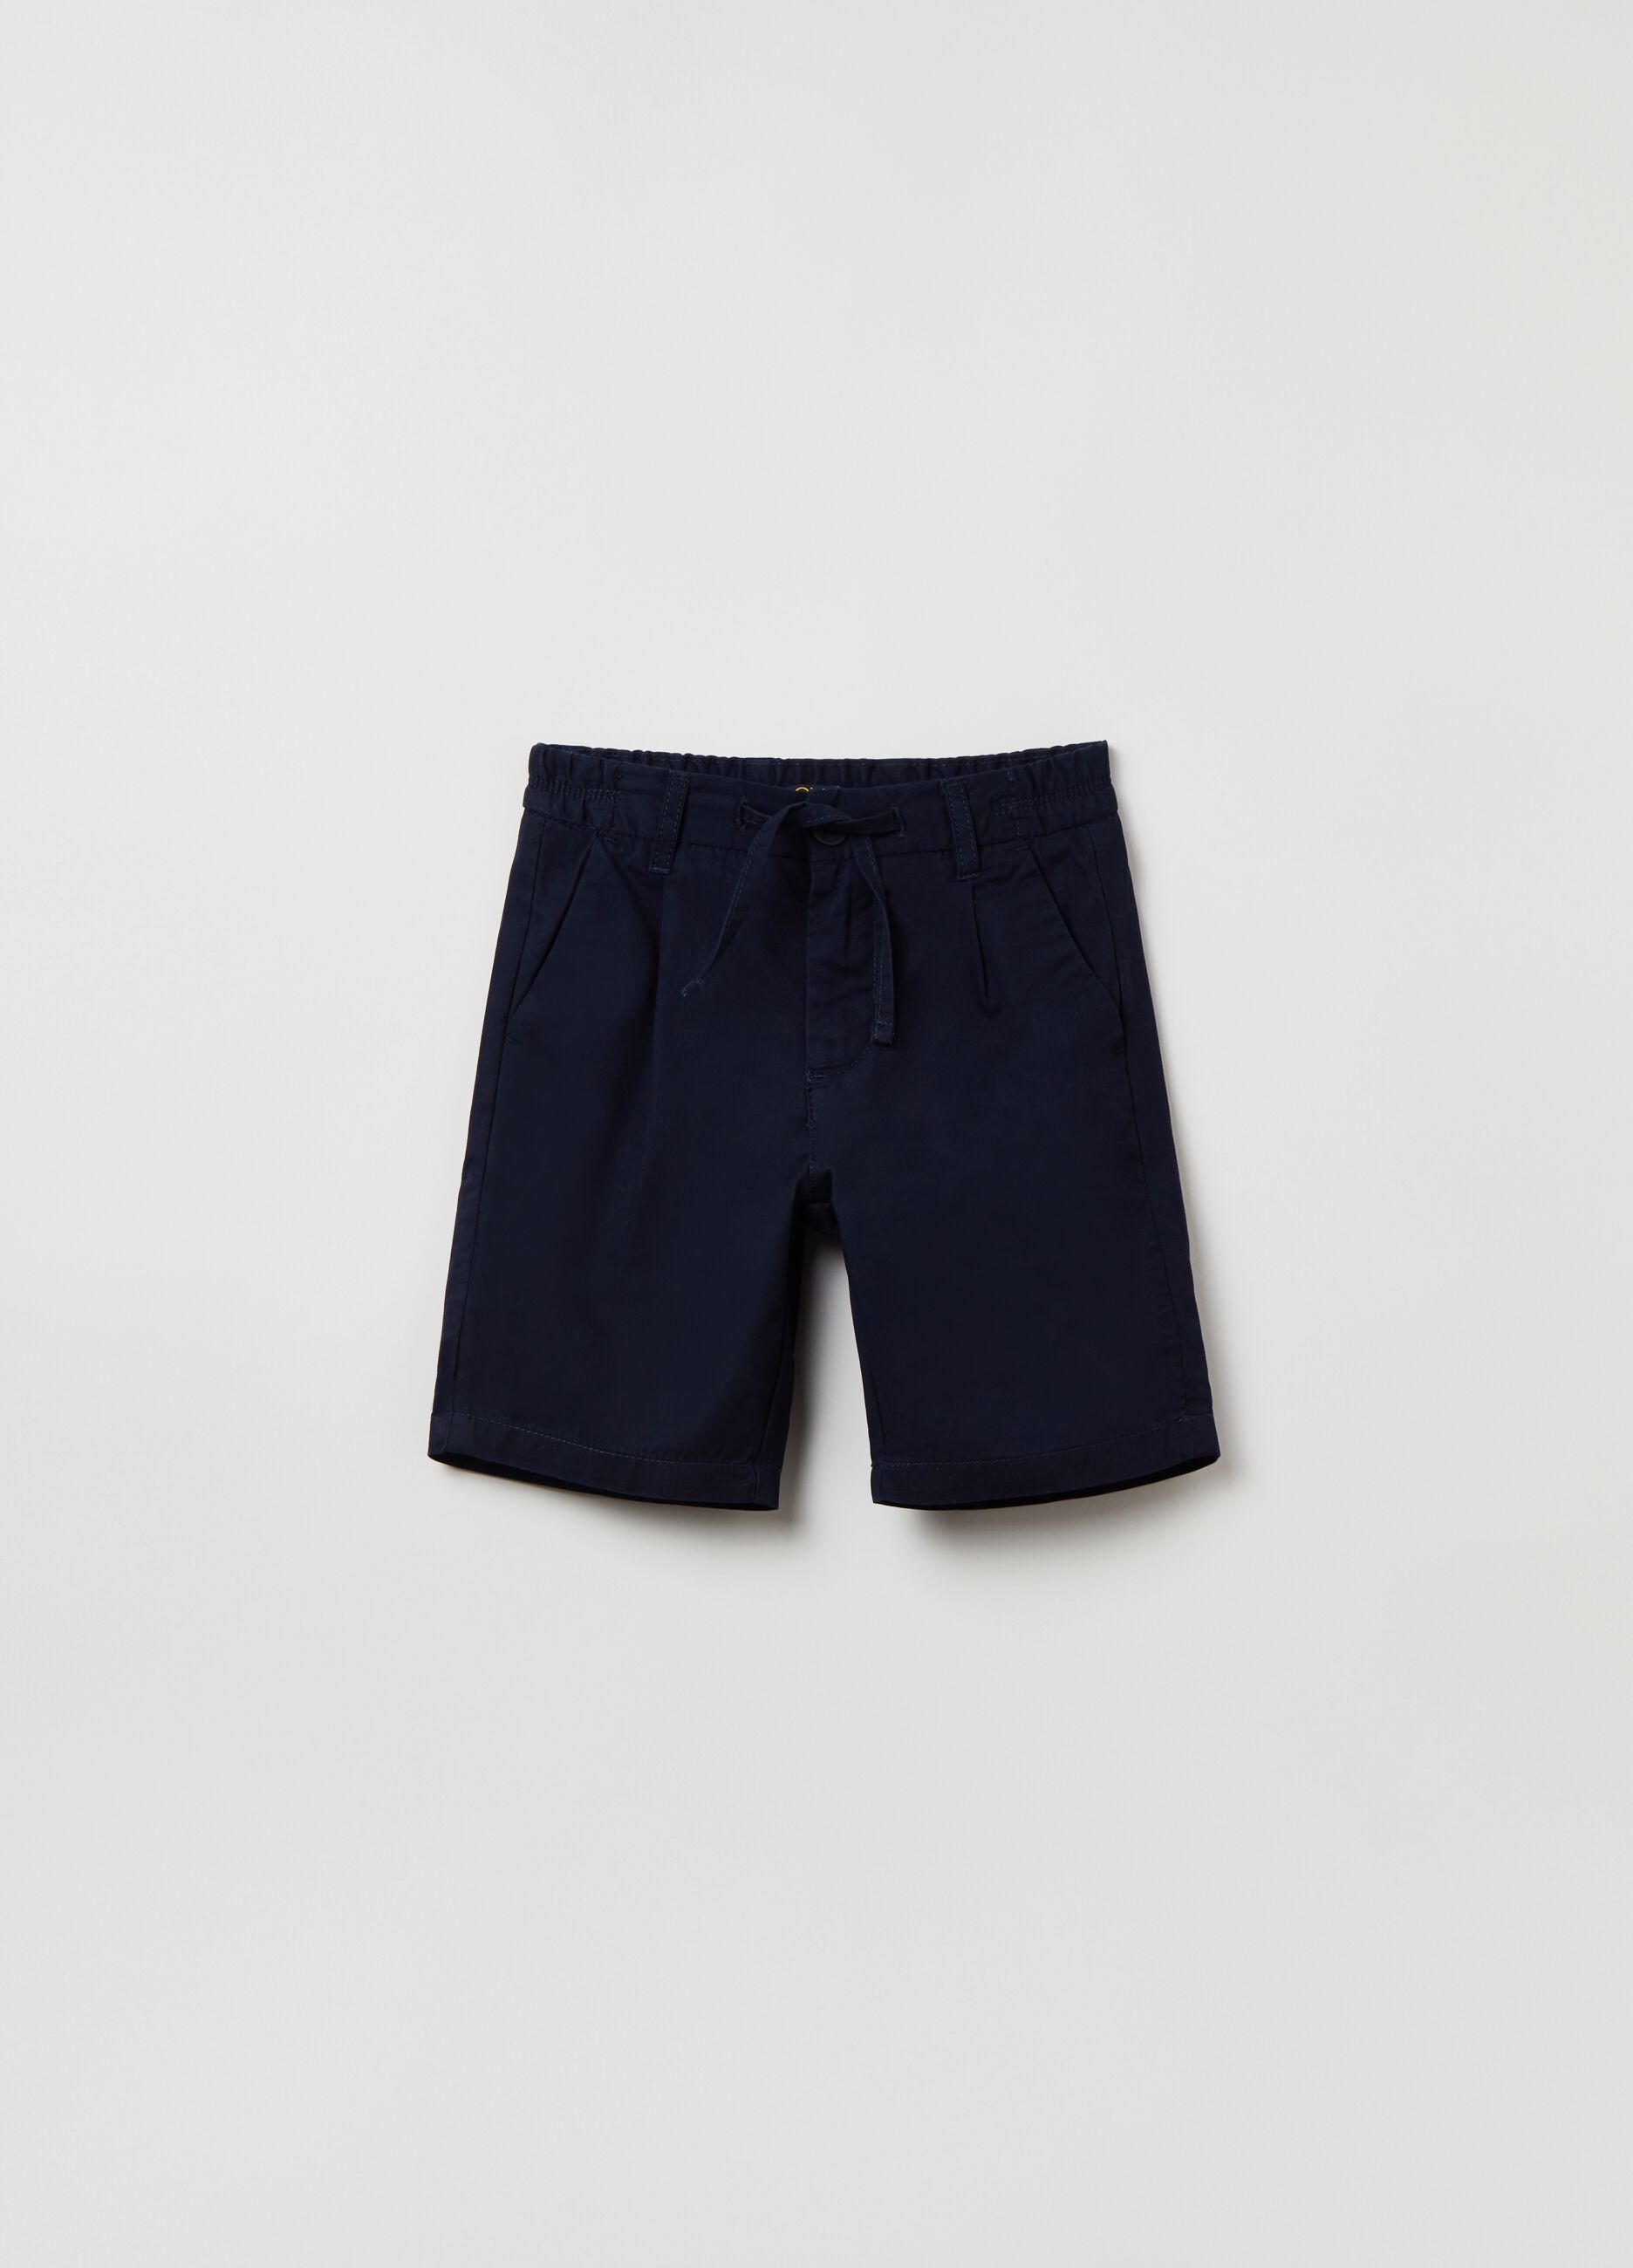 Chino Bermuda shorts in cotton with drawstring